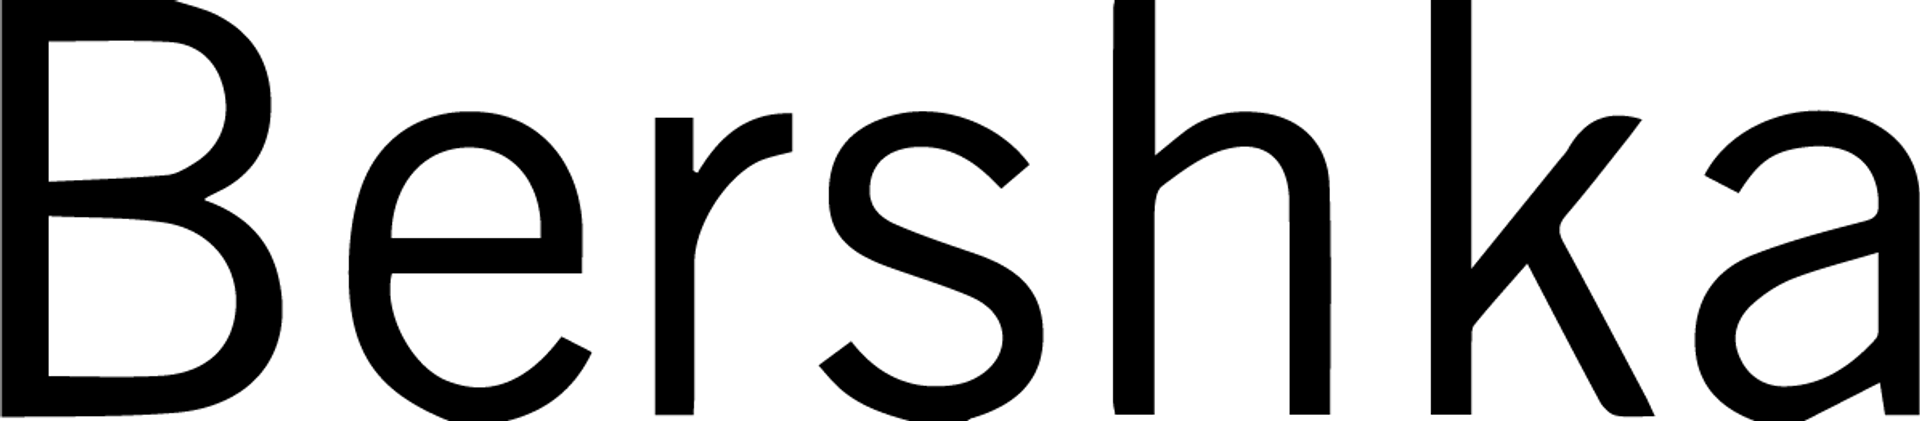 BERSHKA logo die aktuell Prospekt